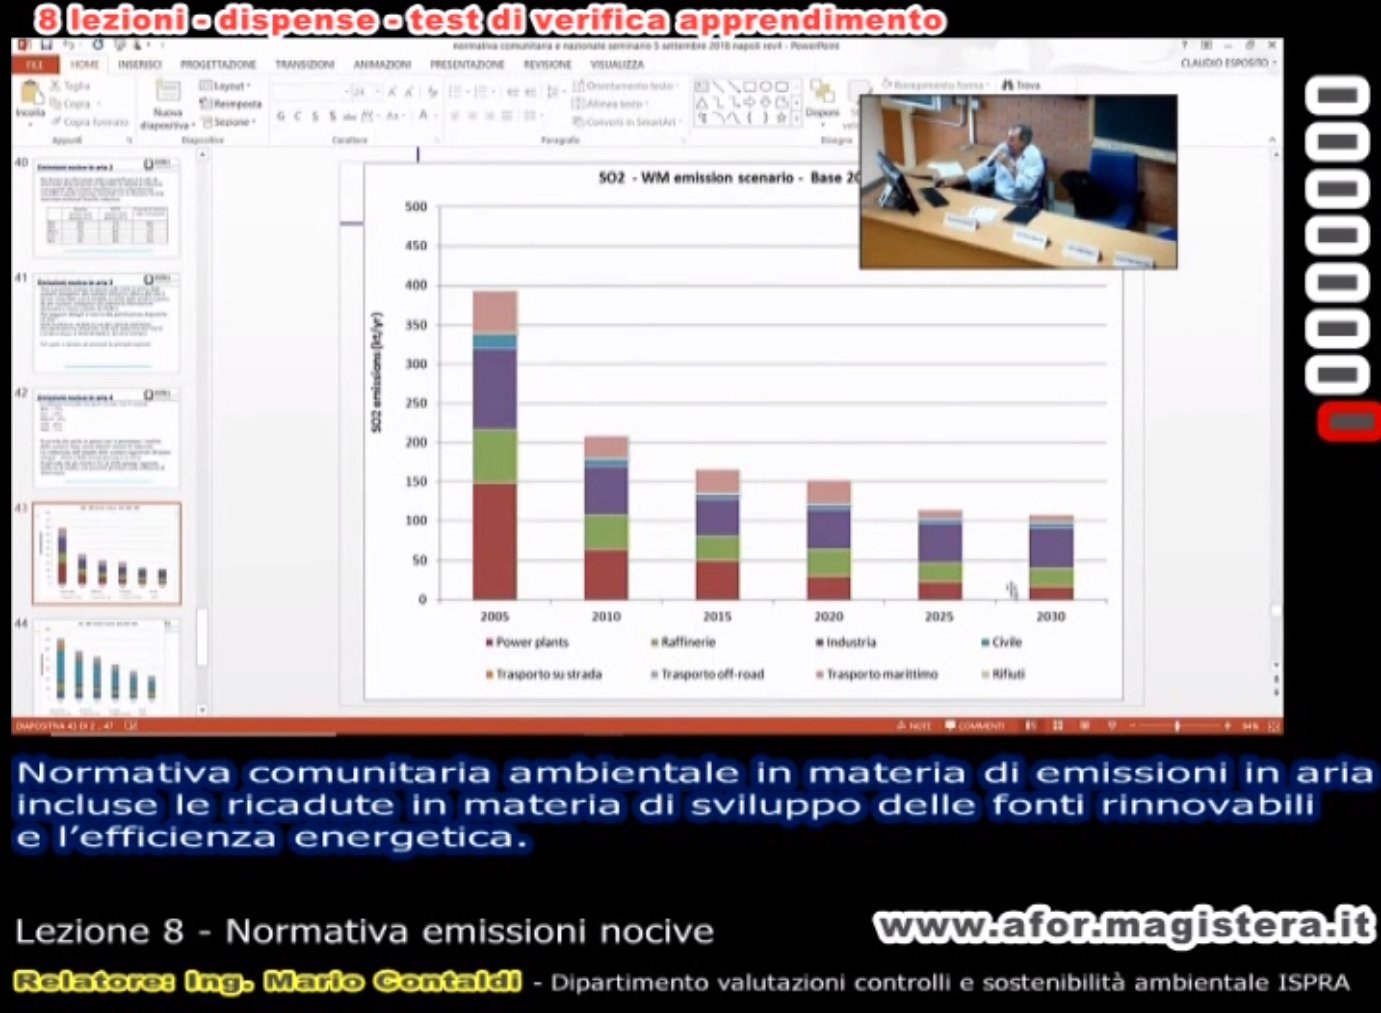 Normativa comunitaria ambientale in materia di emissioni in aria